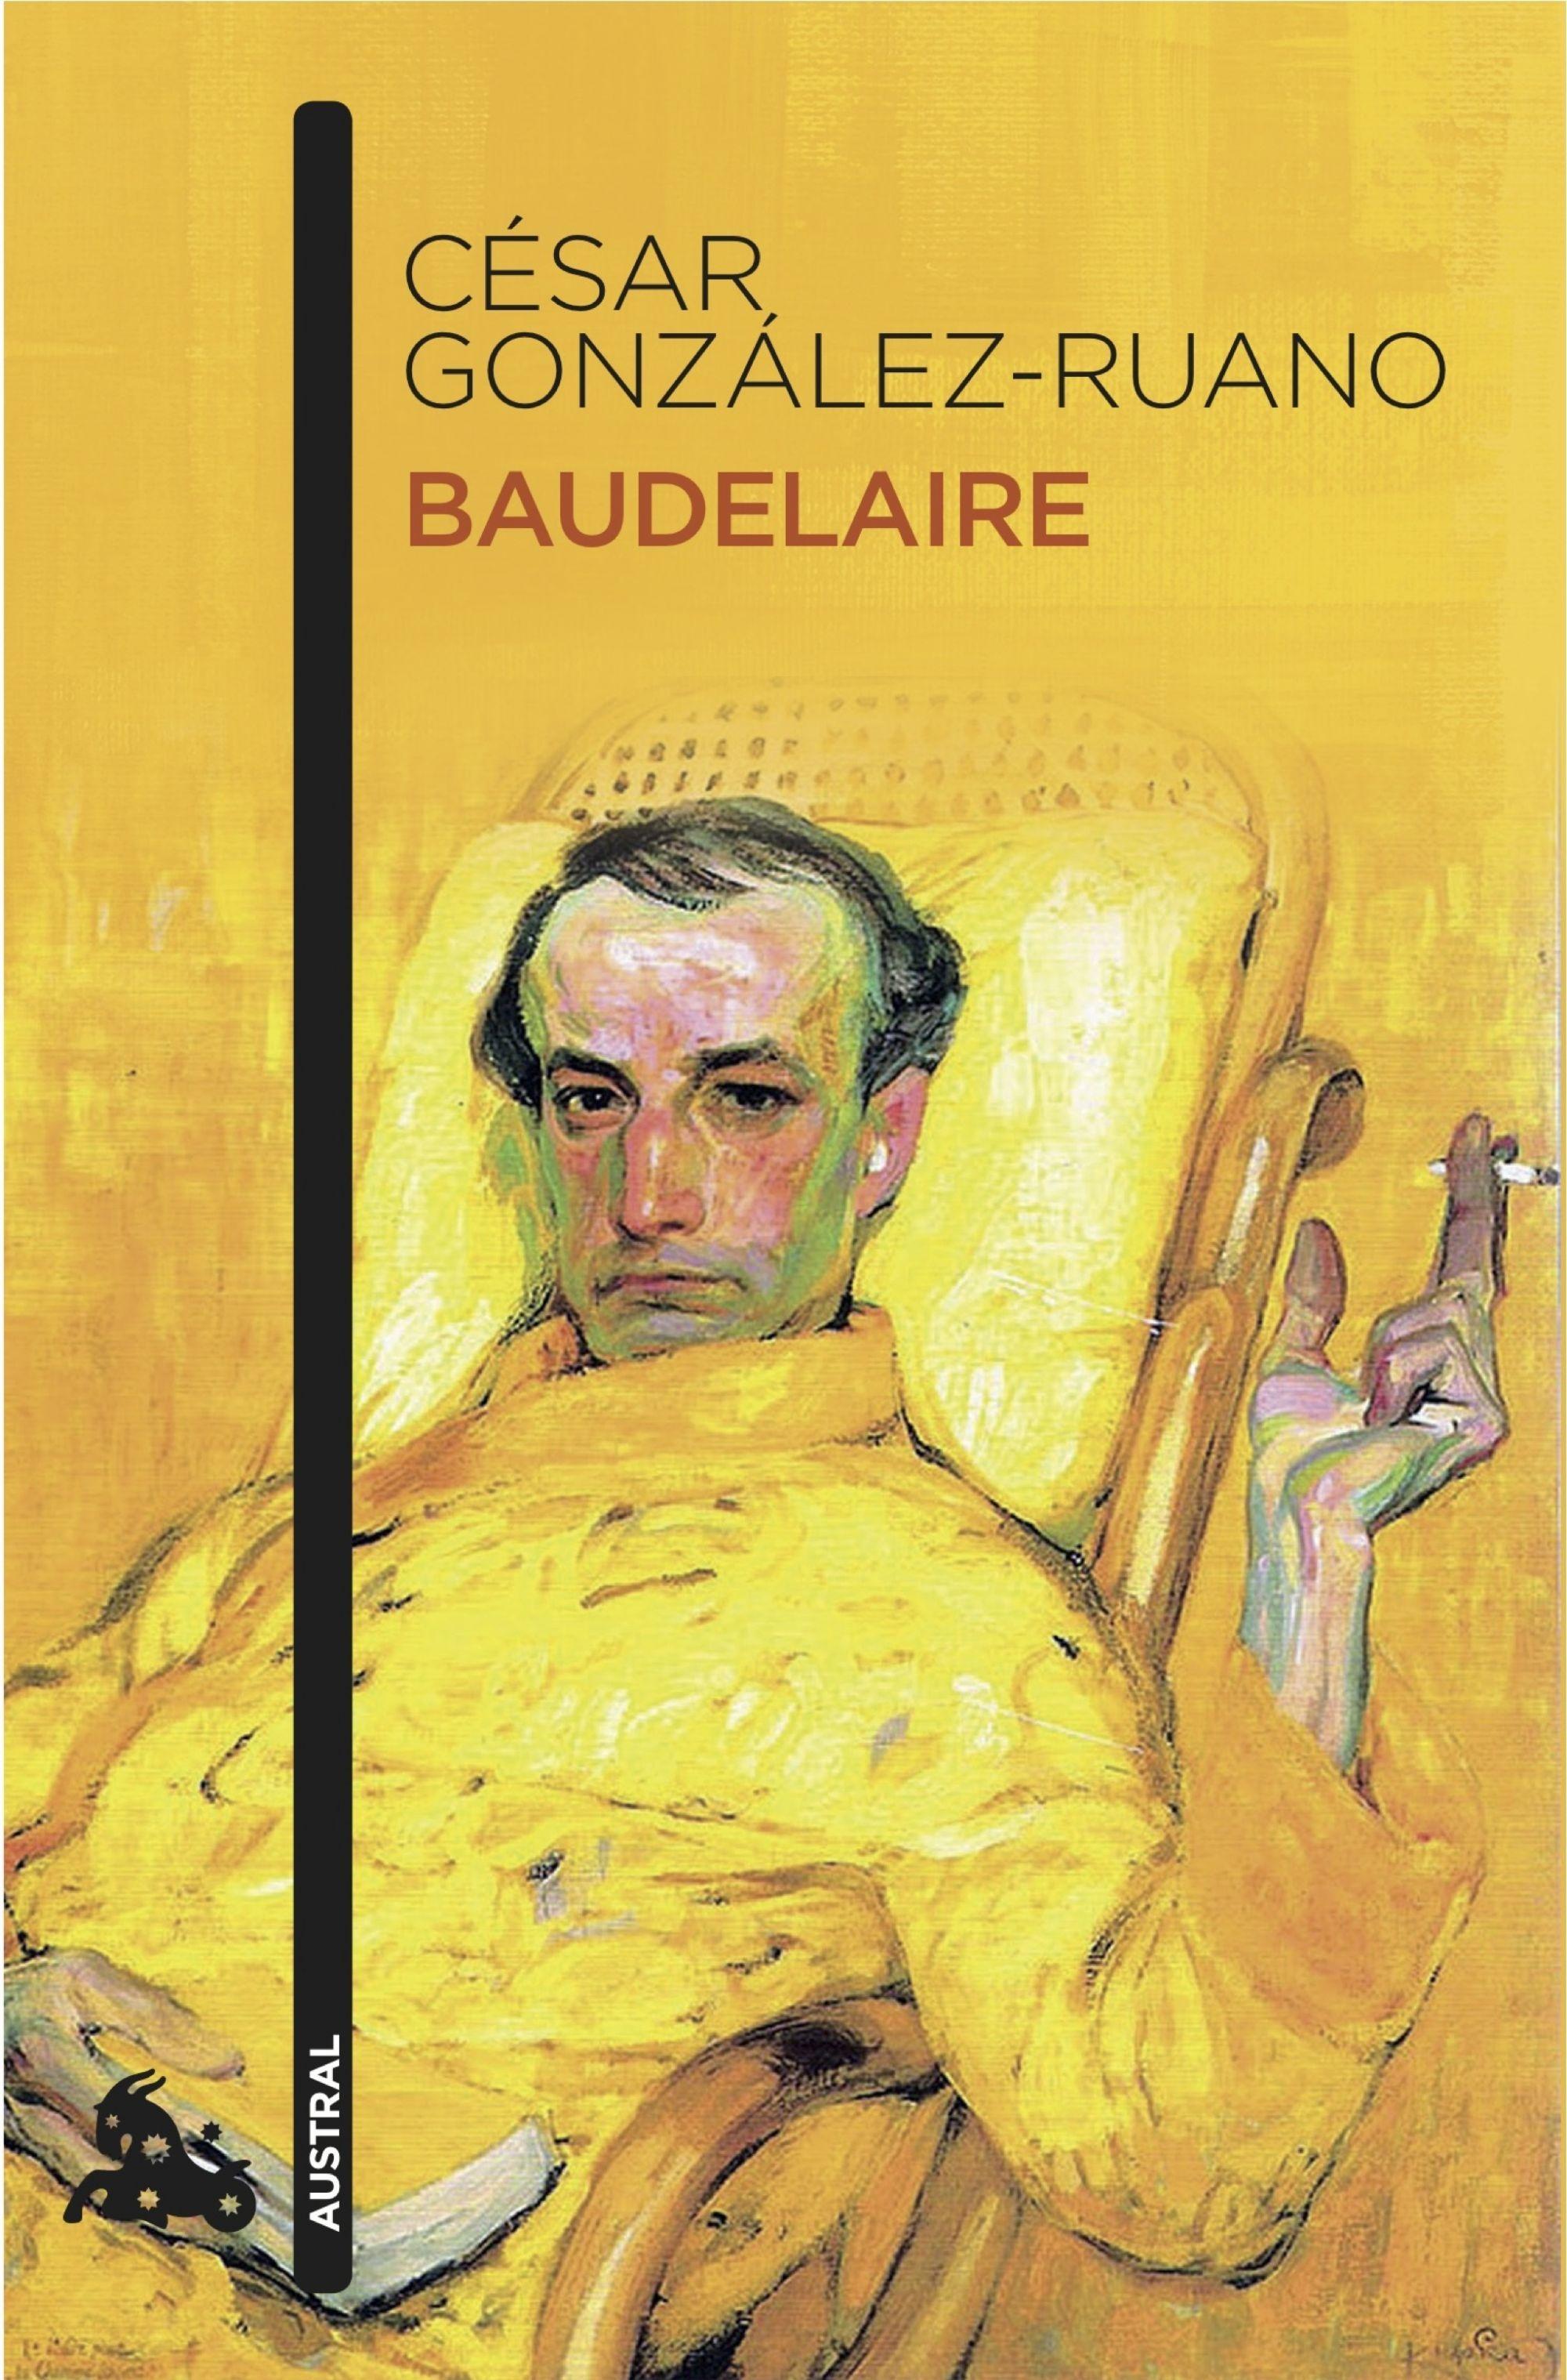 Baudelaire. 